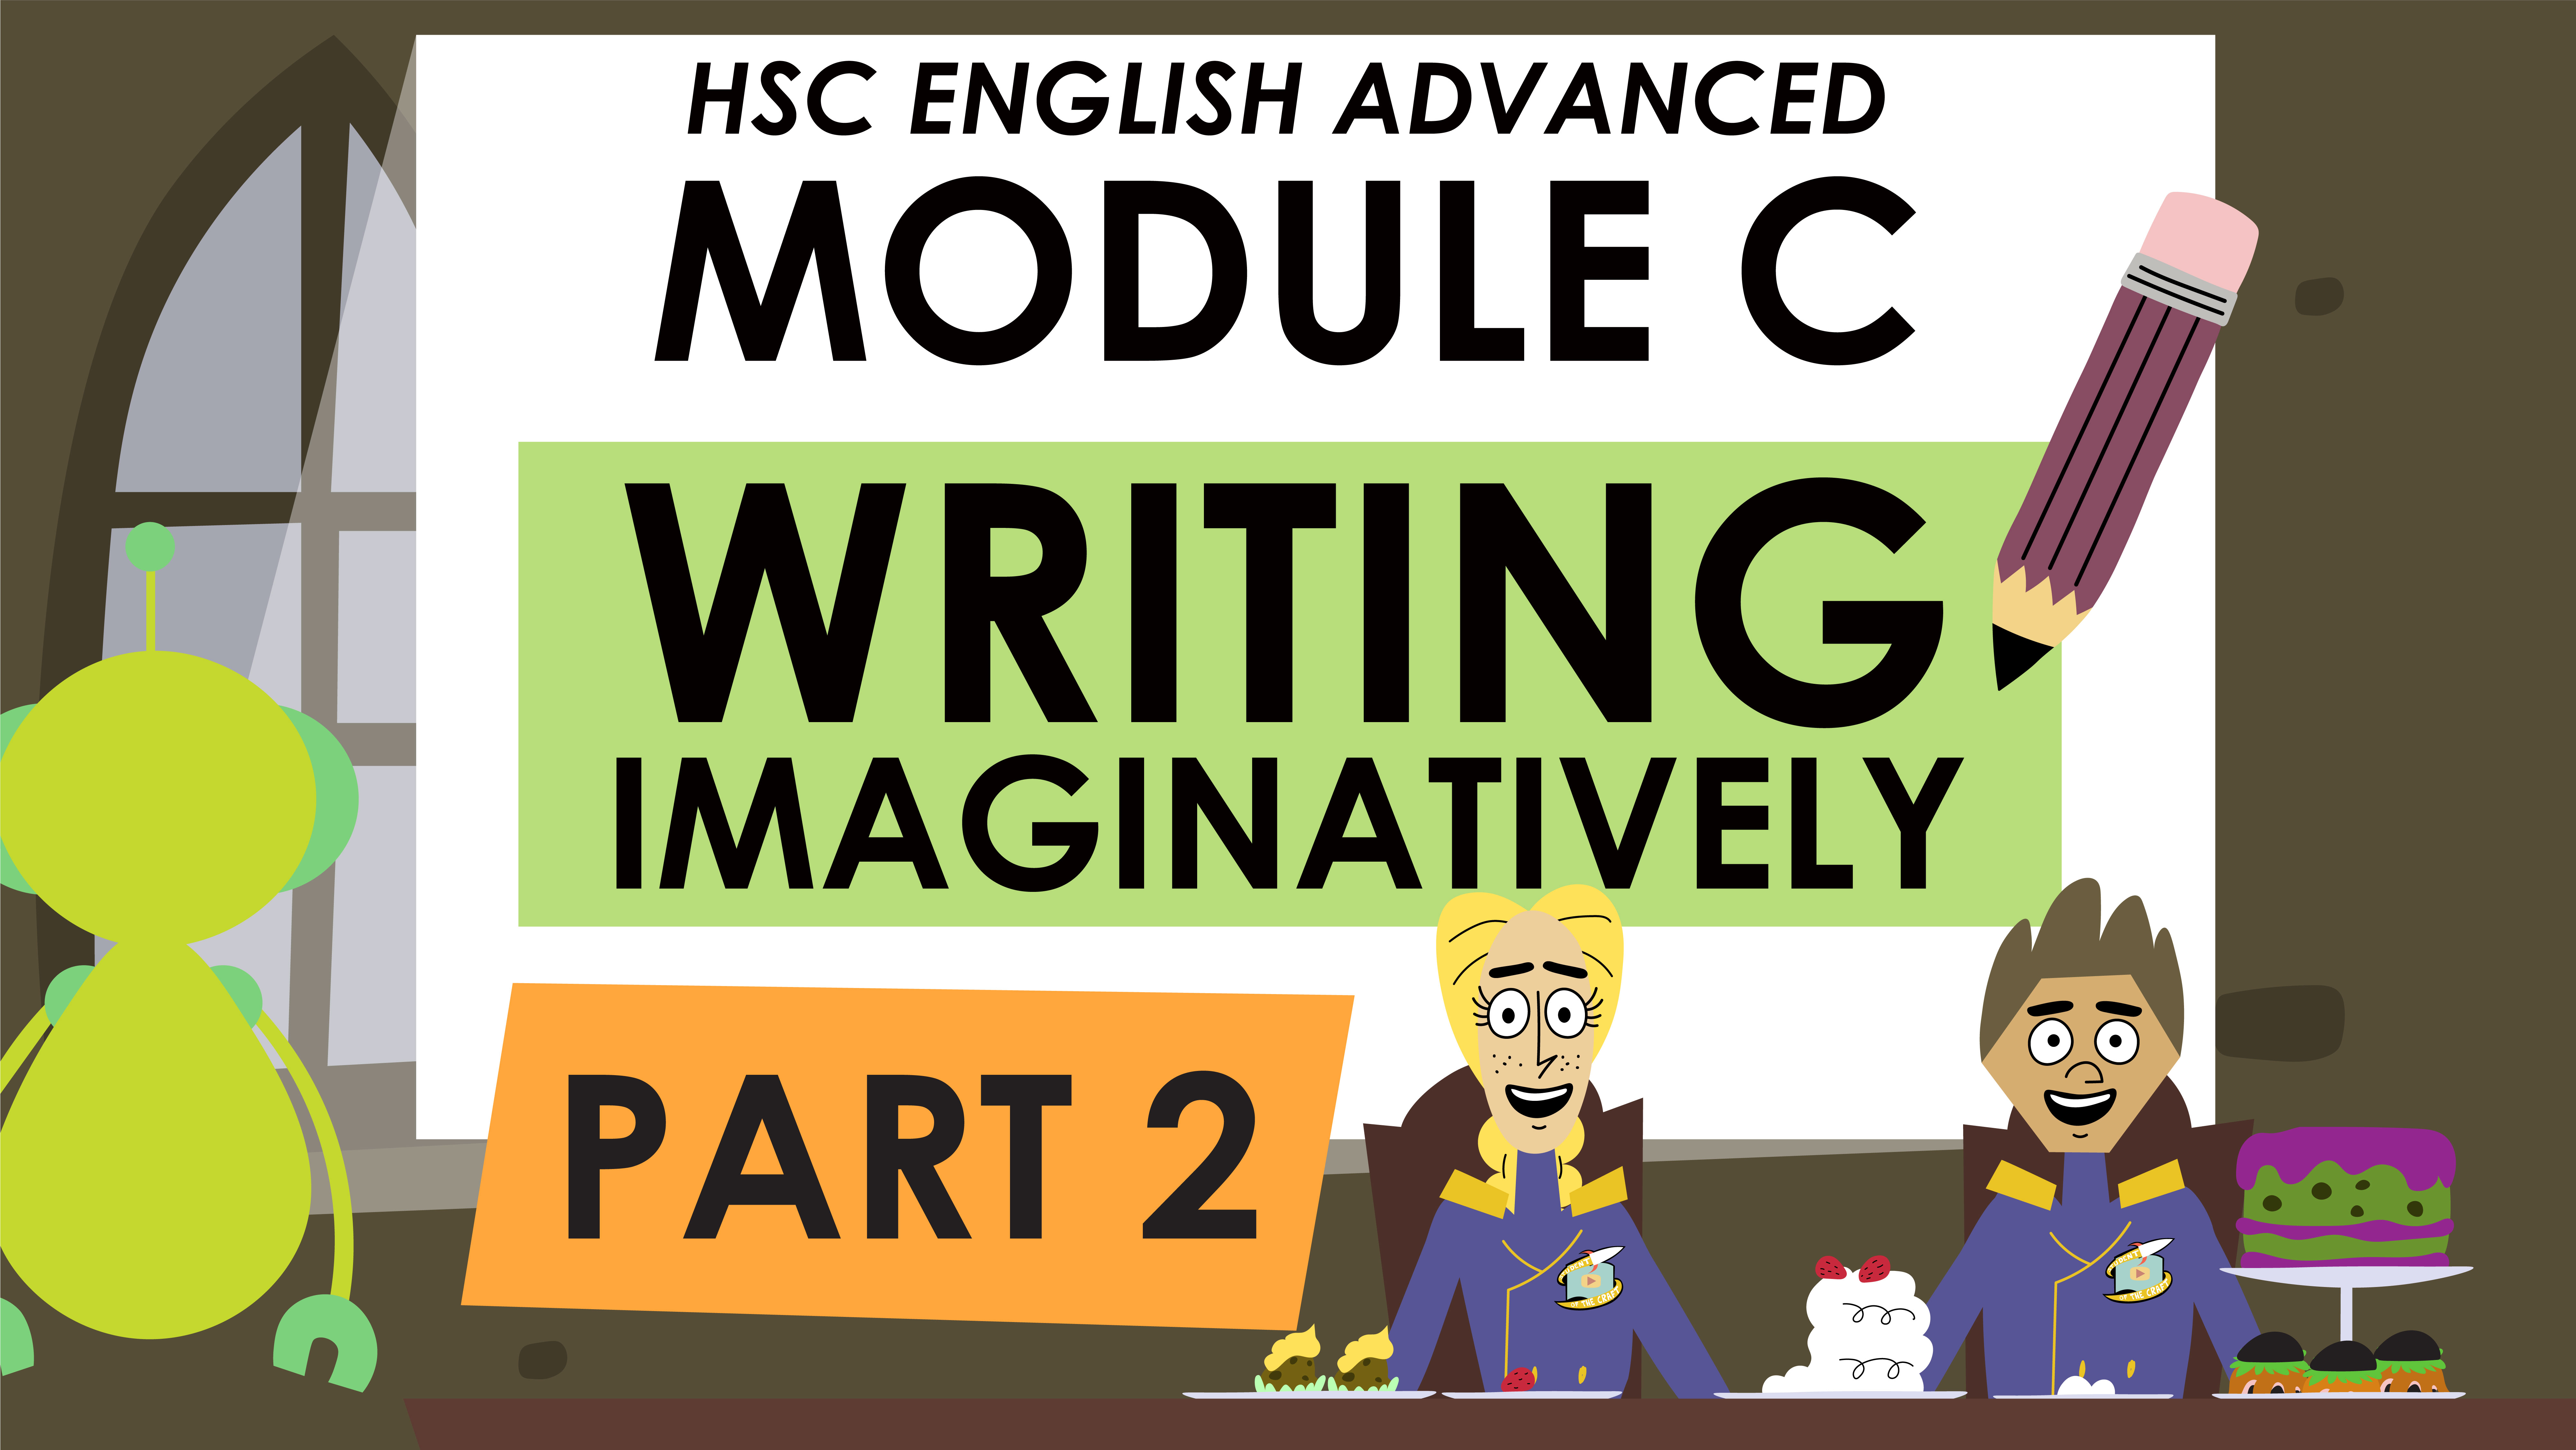 HSC English Advanced Module C - Writing Imaginatively Part 2